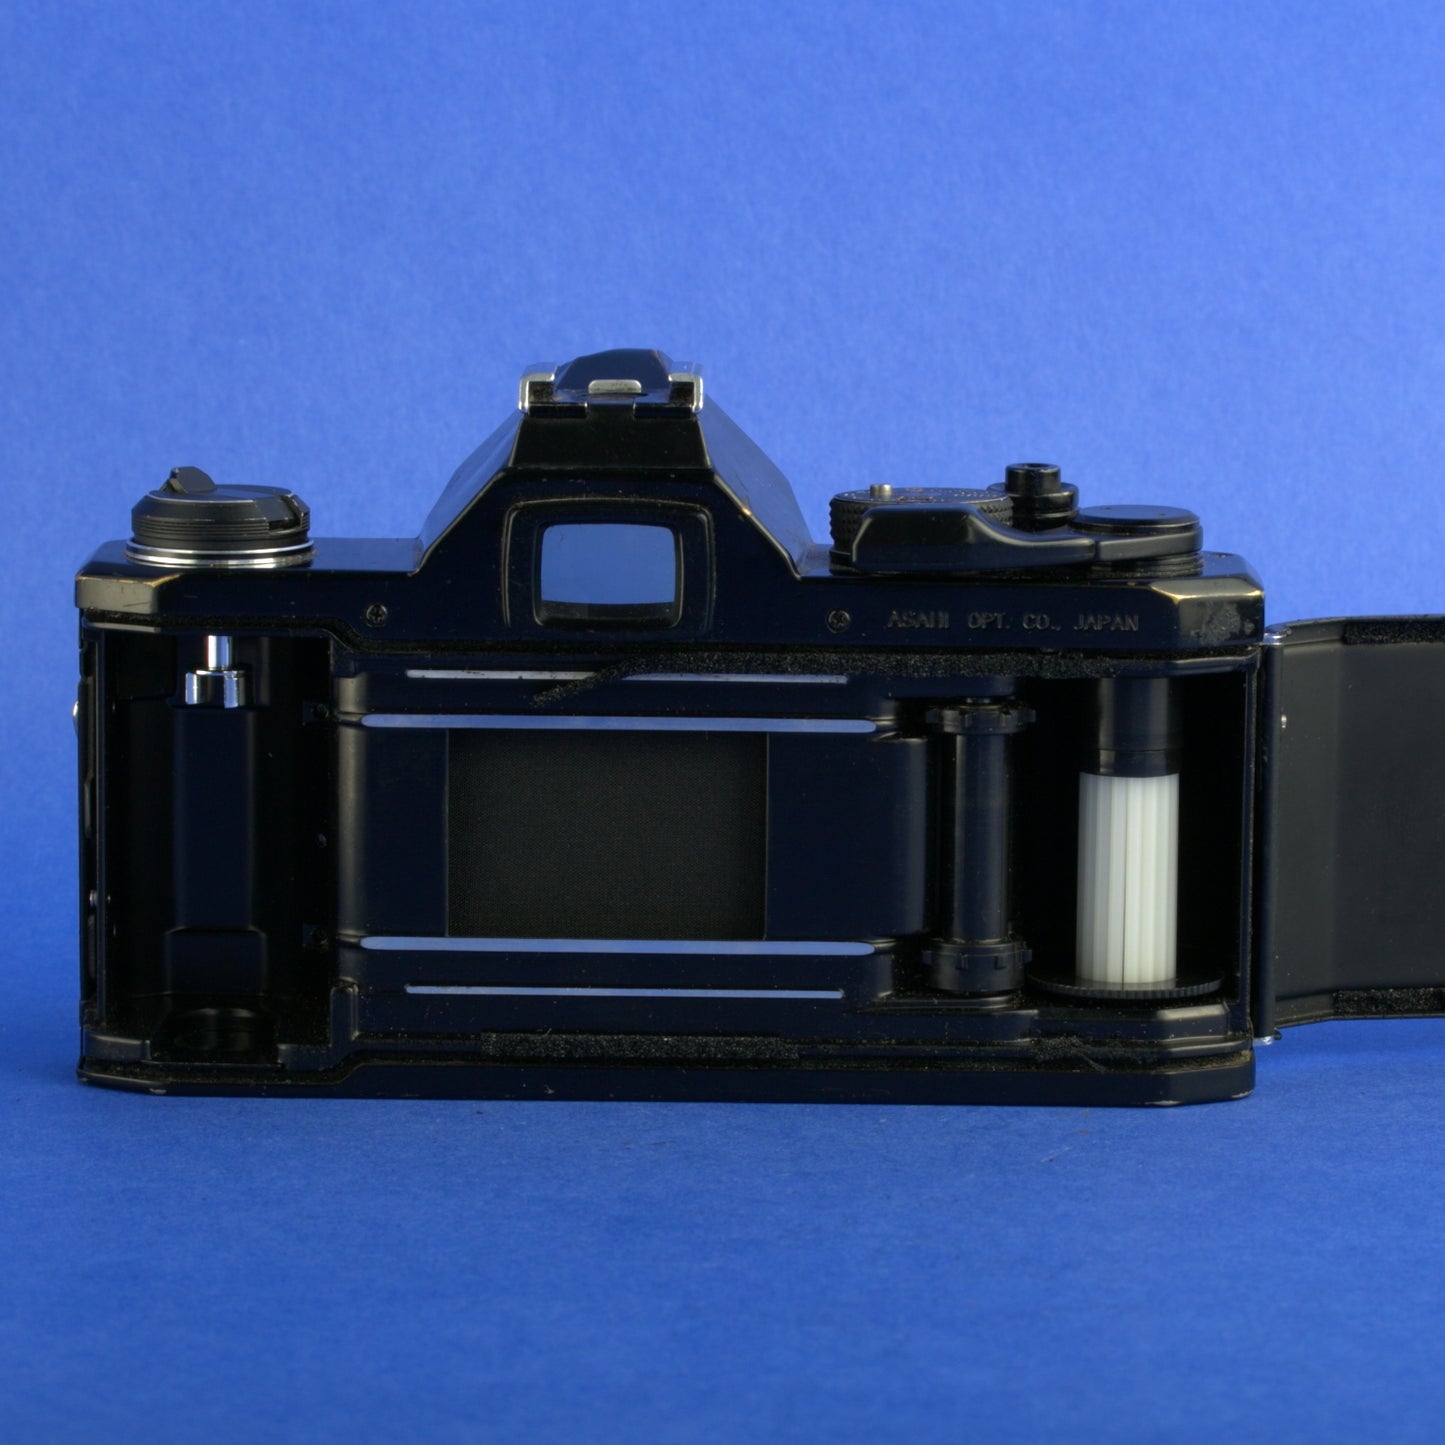 Pentax MX Film Camera Body